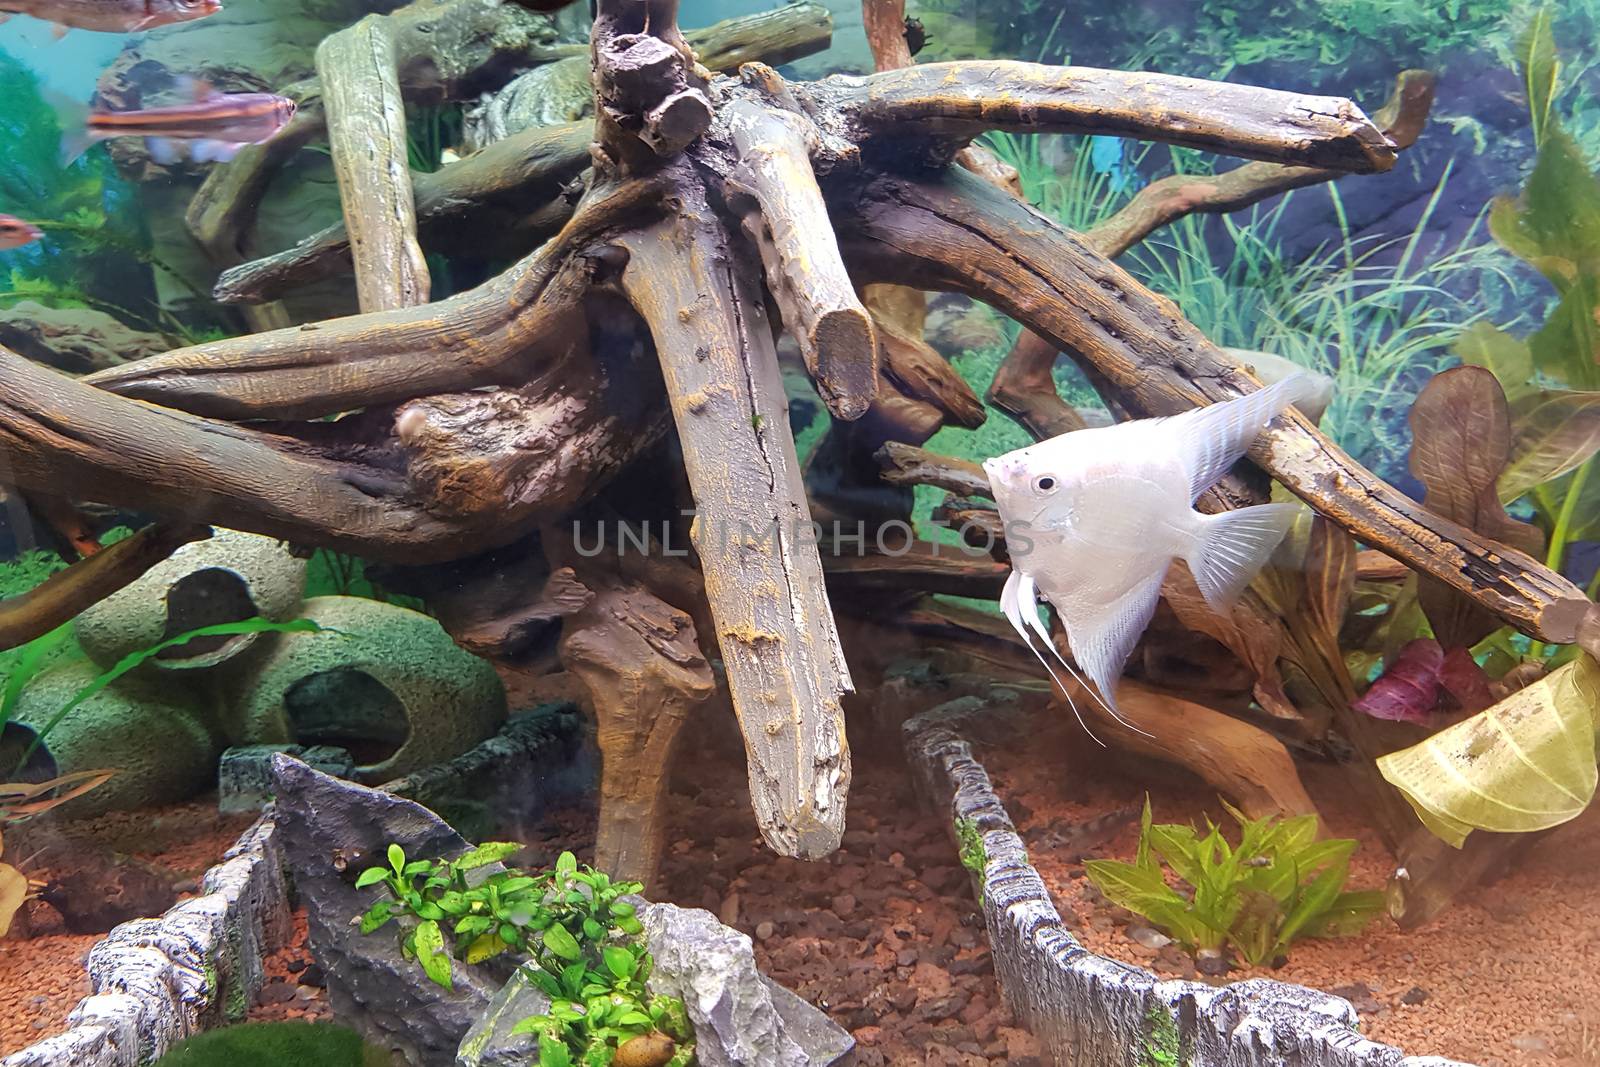 Indoor aquarium. A tropical freshwater aquarium with green plants and decoration.